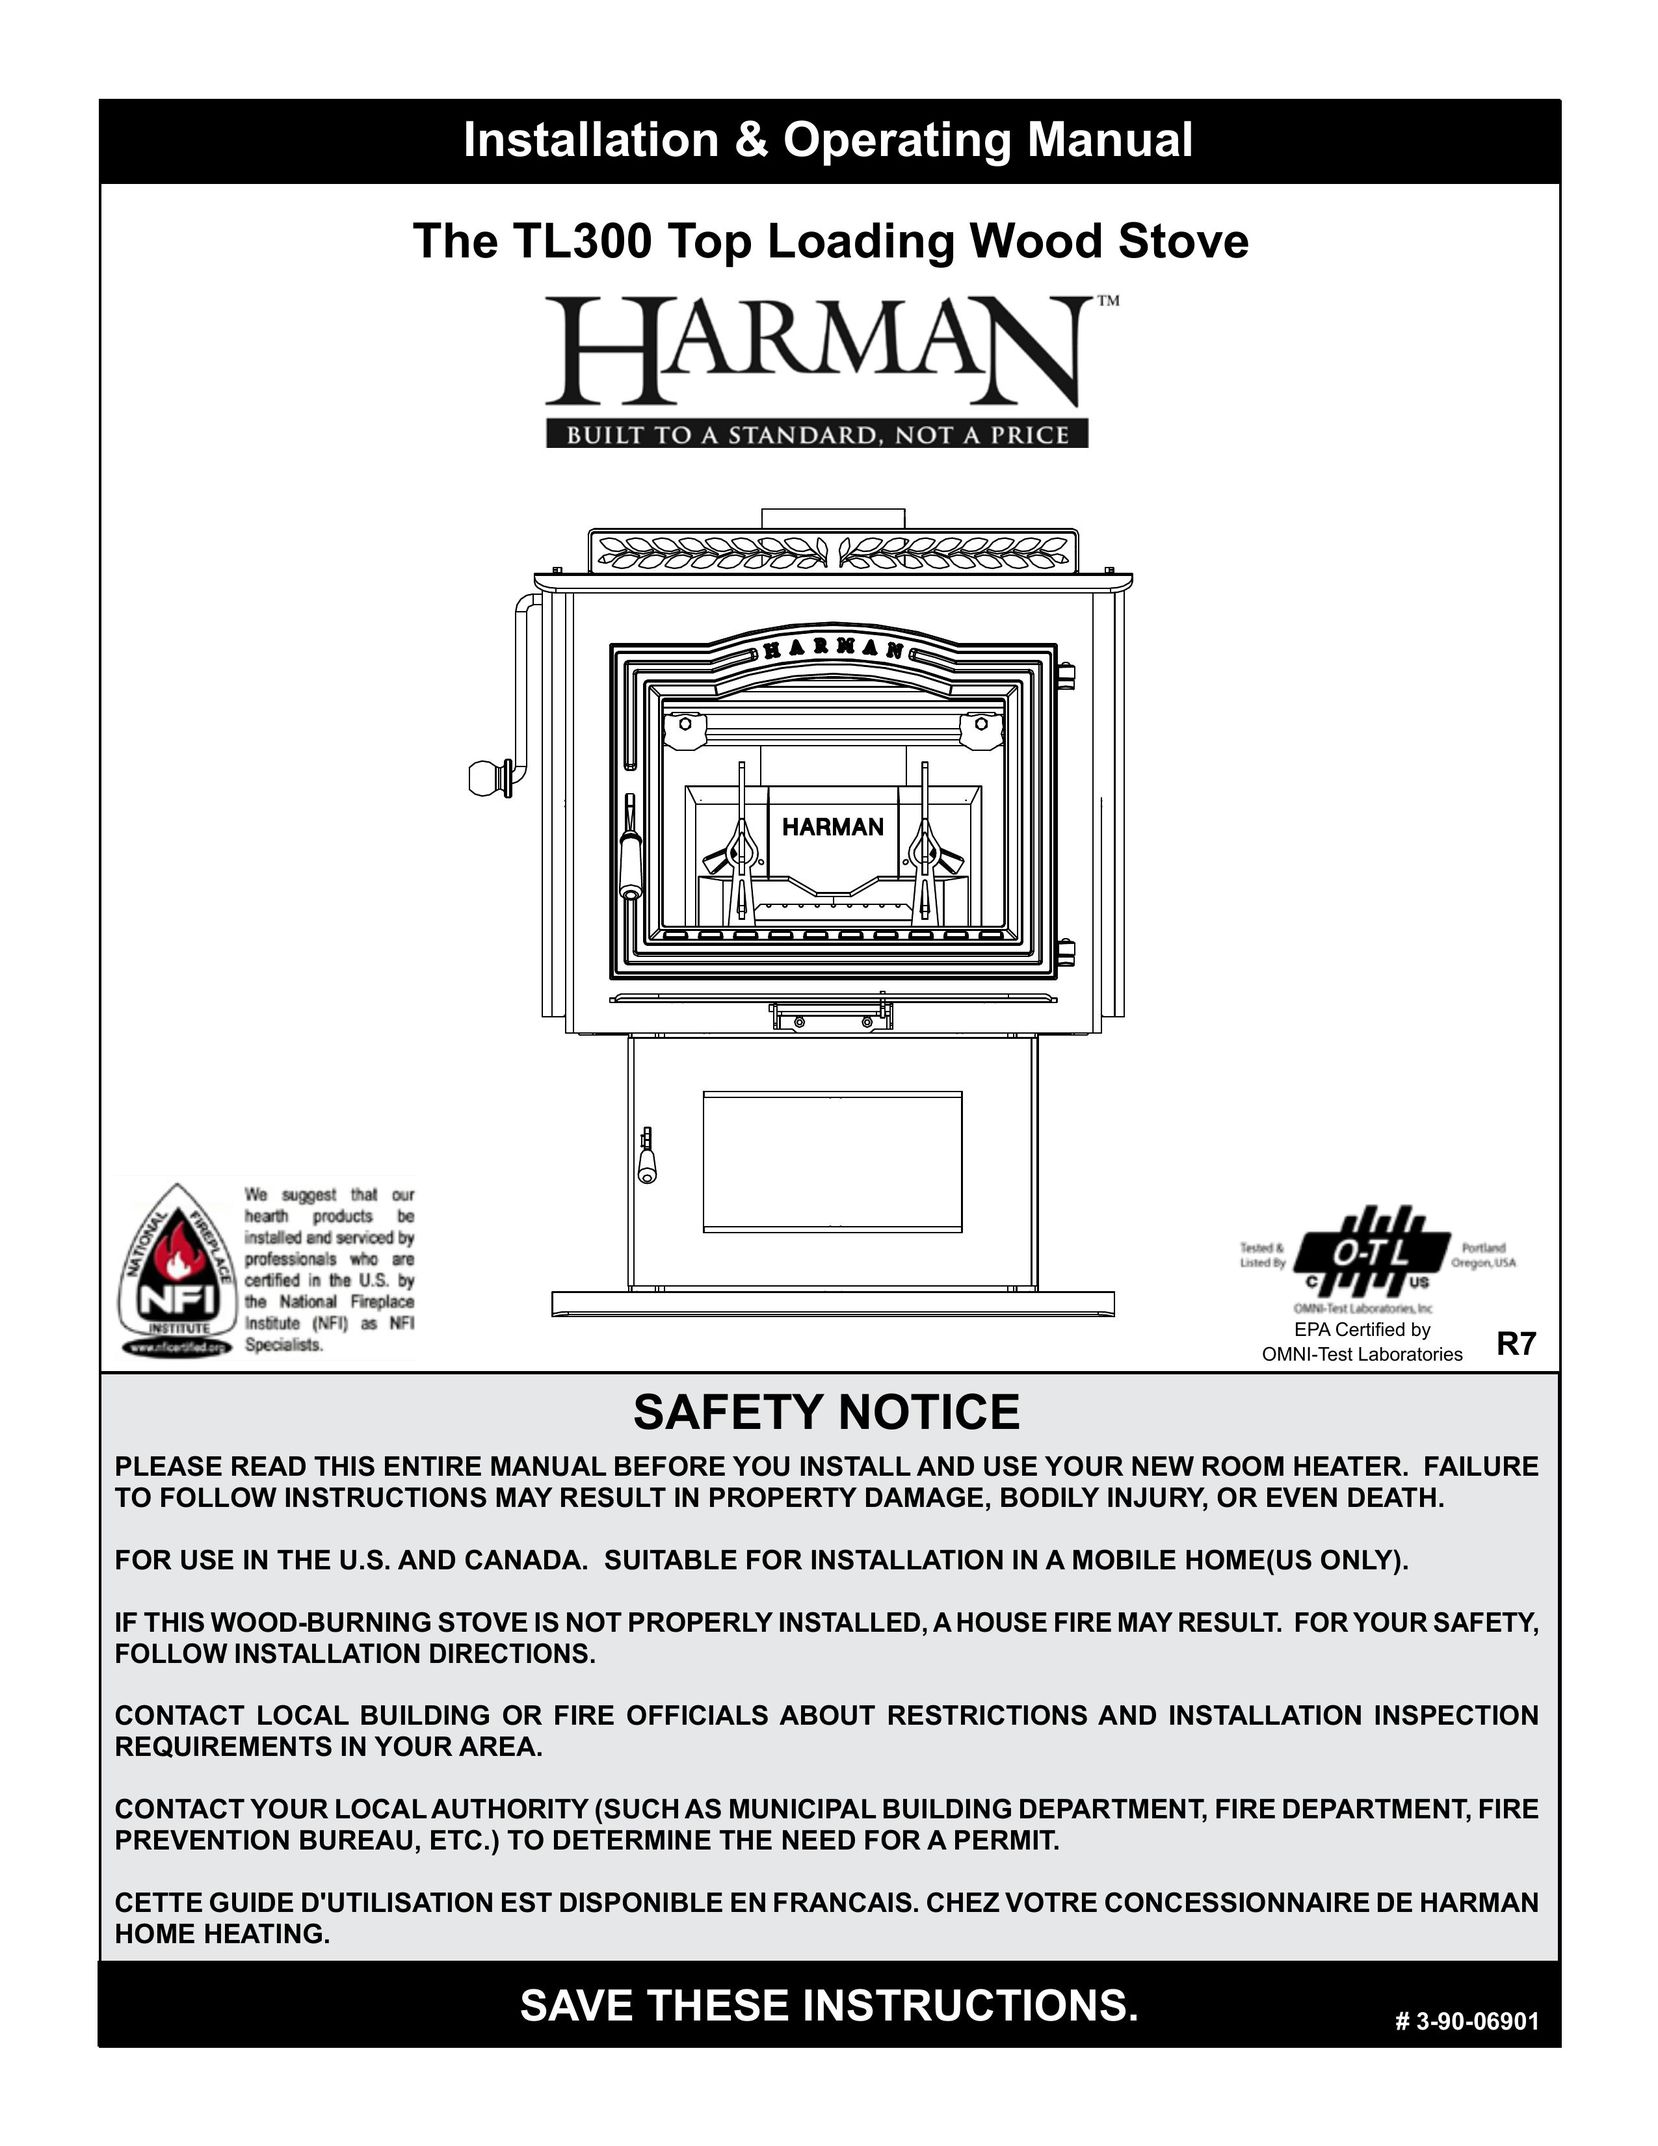 Harman Stove Company TL 300 Stove User Manual